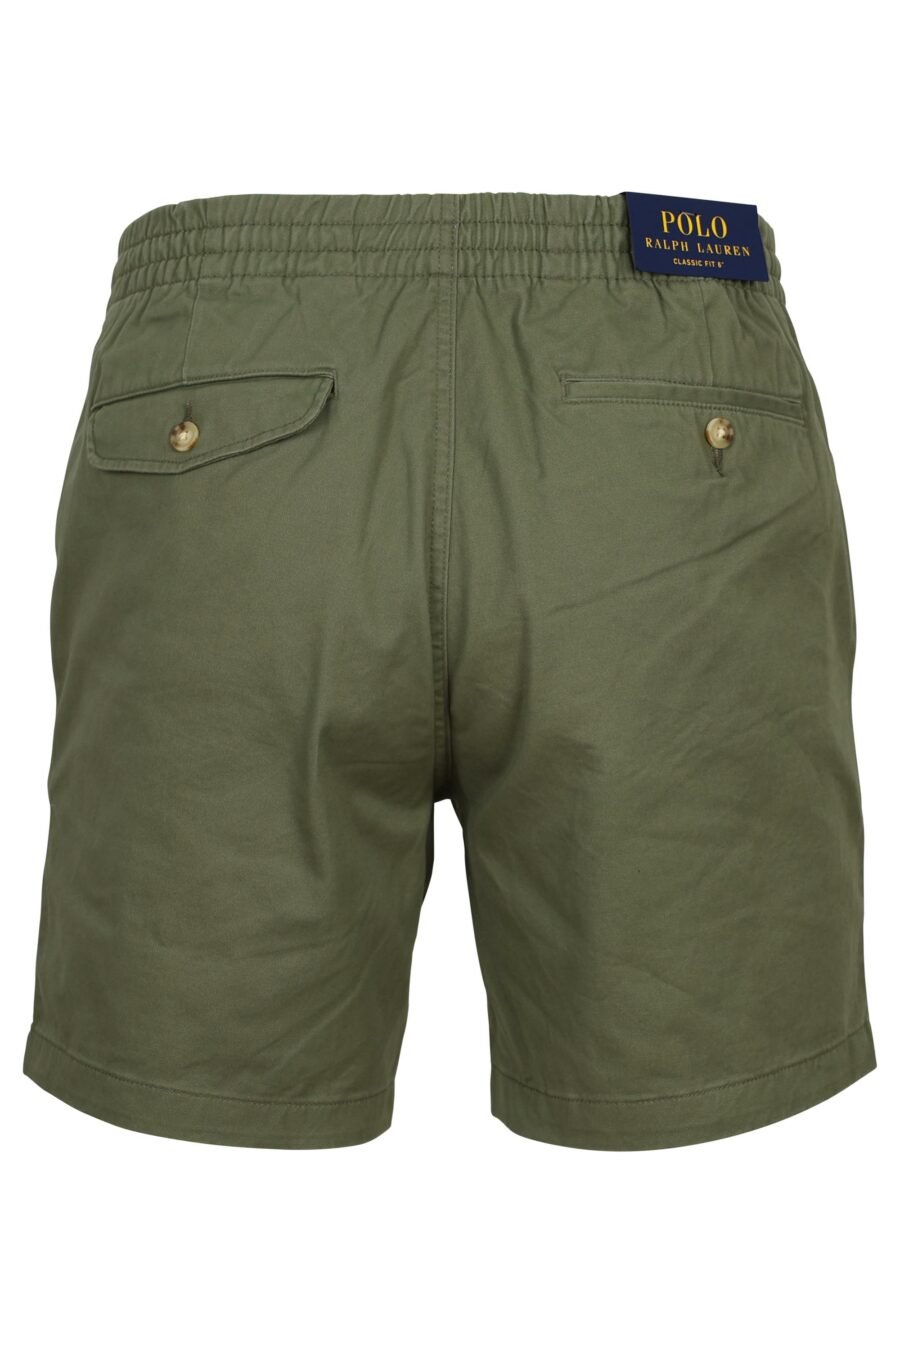 Military green shorts with mini-logo "polo" - 3616419584849 1